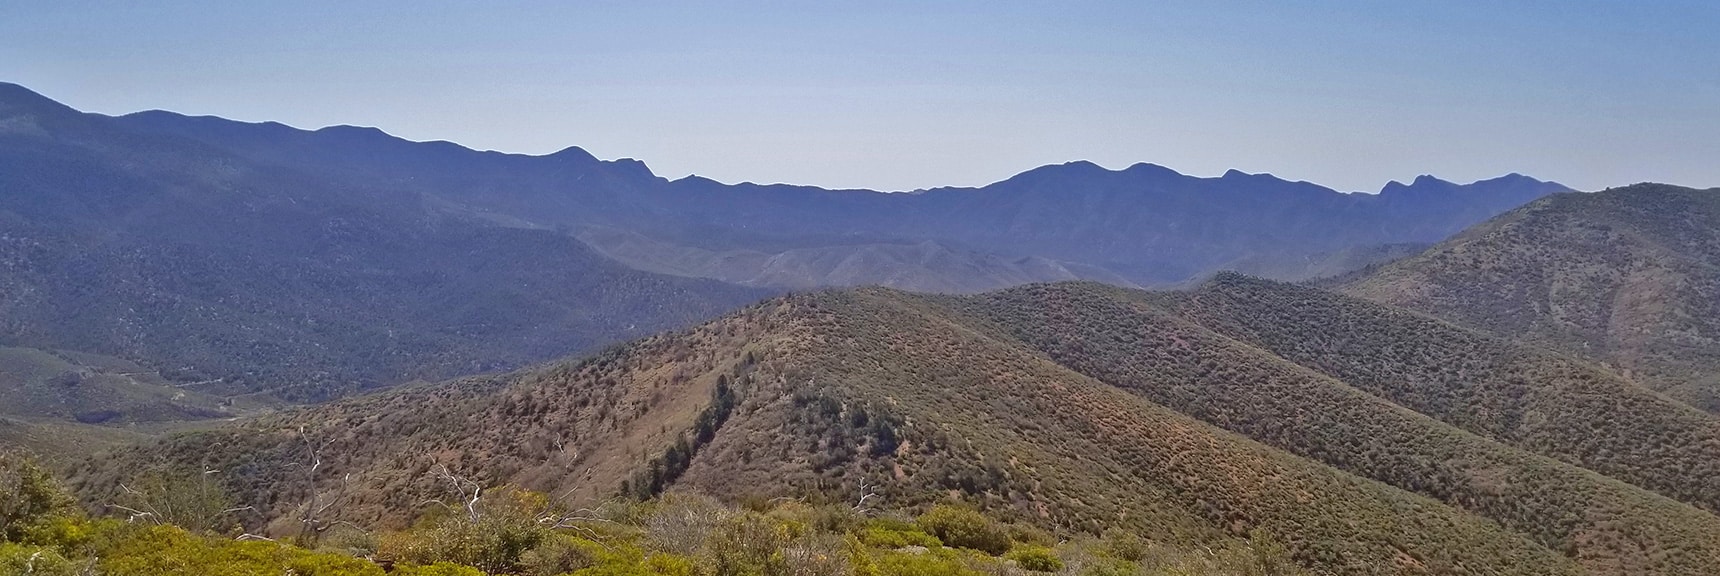 Lovell Canyon and Wilson Ridge Viewed from Sexton Ridge Approach Ridge | Griffith Peak Southern Approach from Sexton Ridge Above Lovell Canyon, Nevada